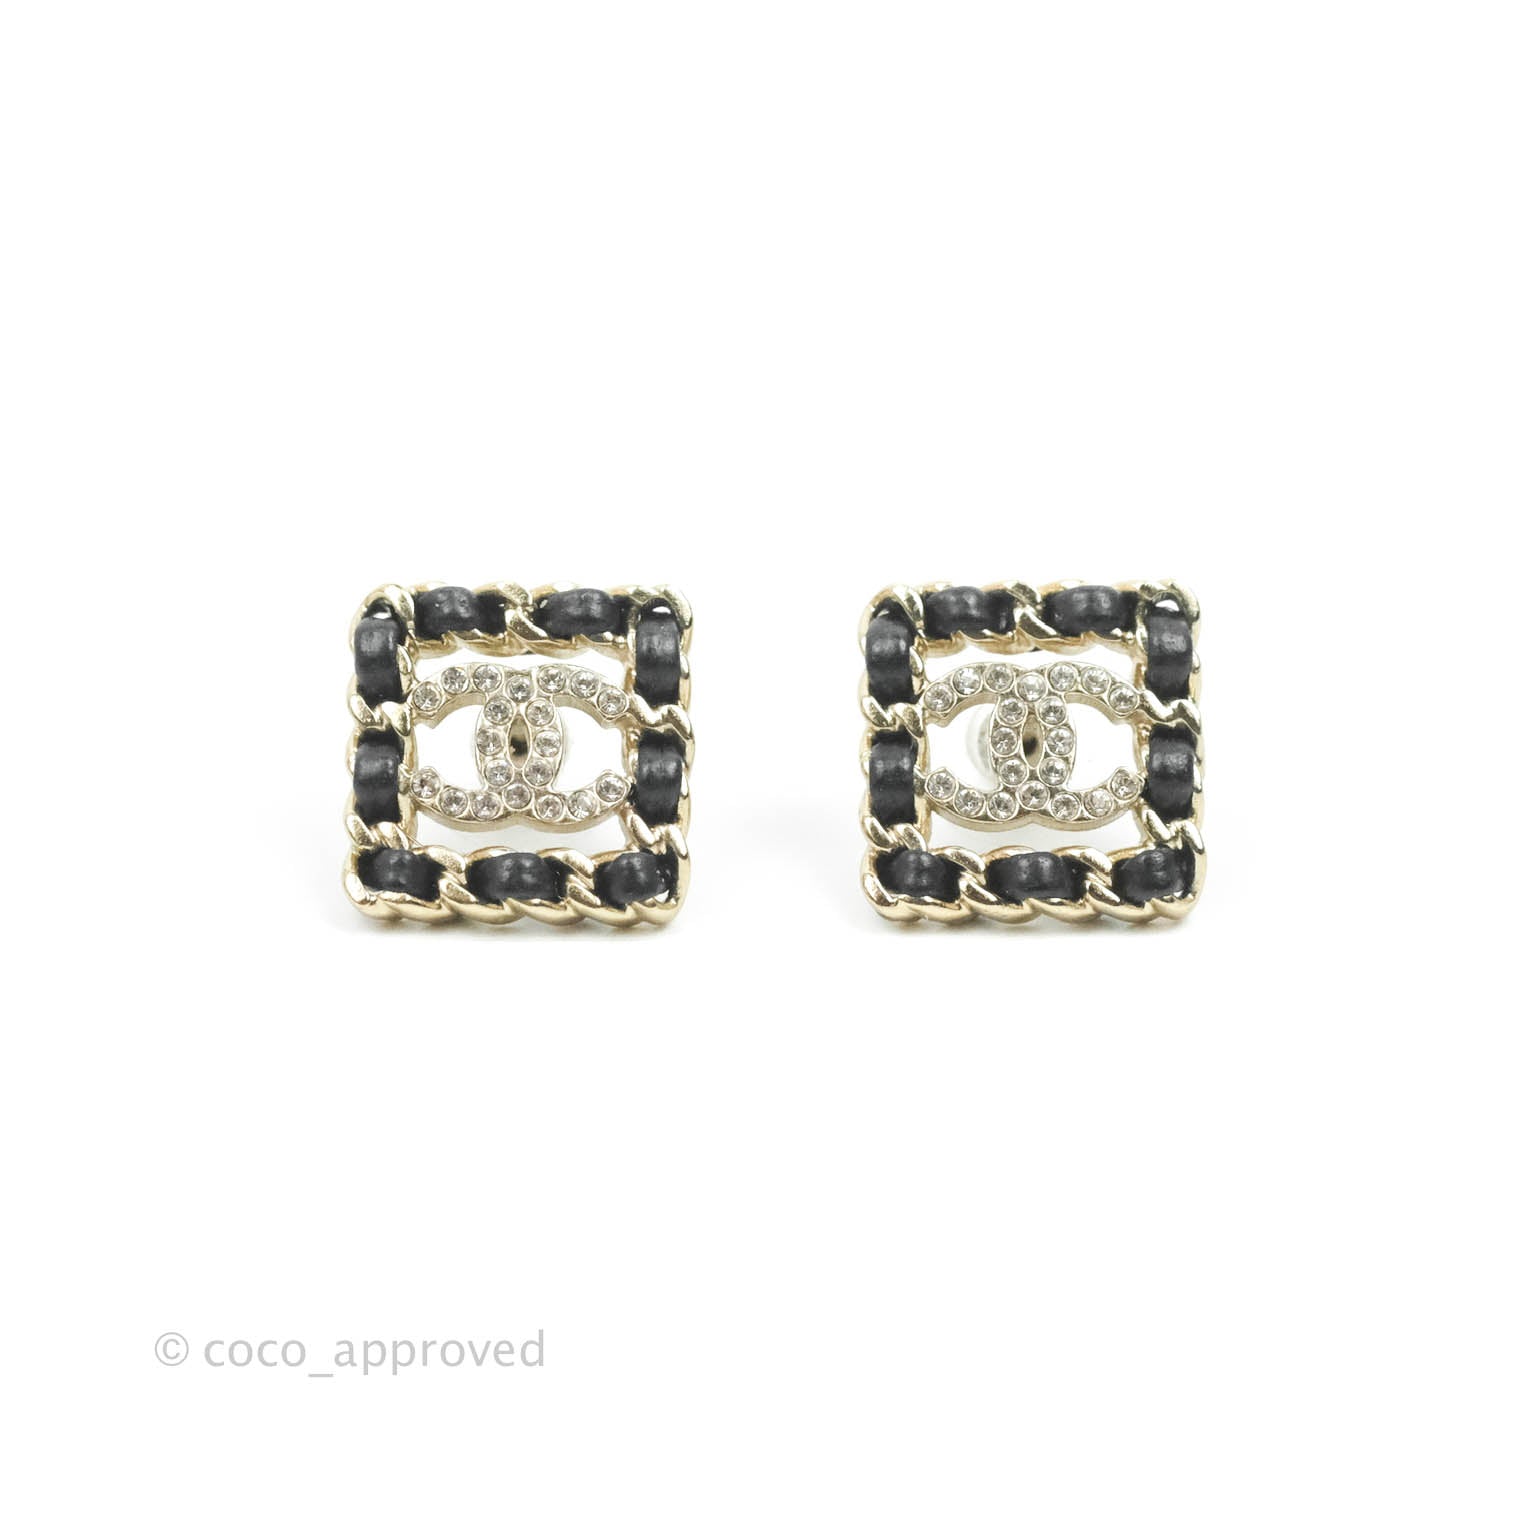 Chanel CC Crystal and Dark Pearl Earrings